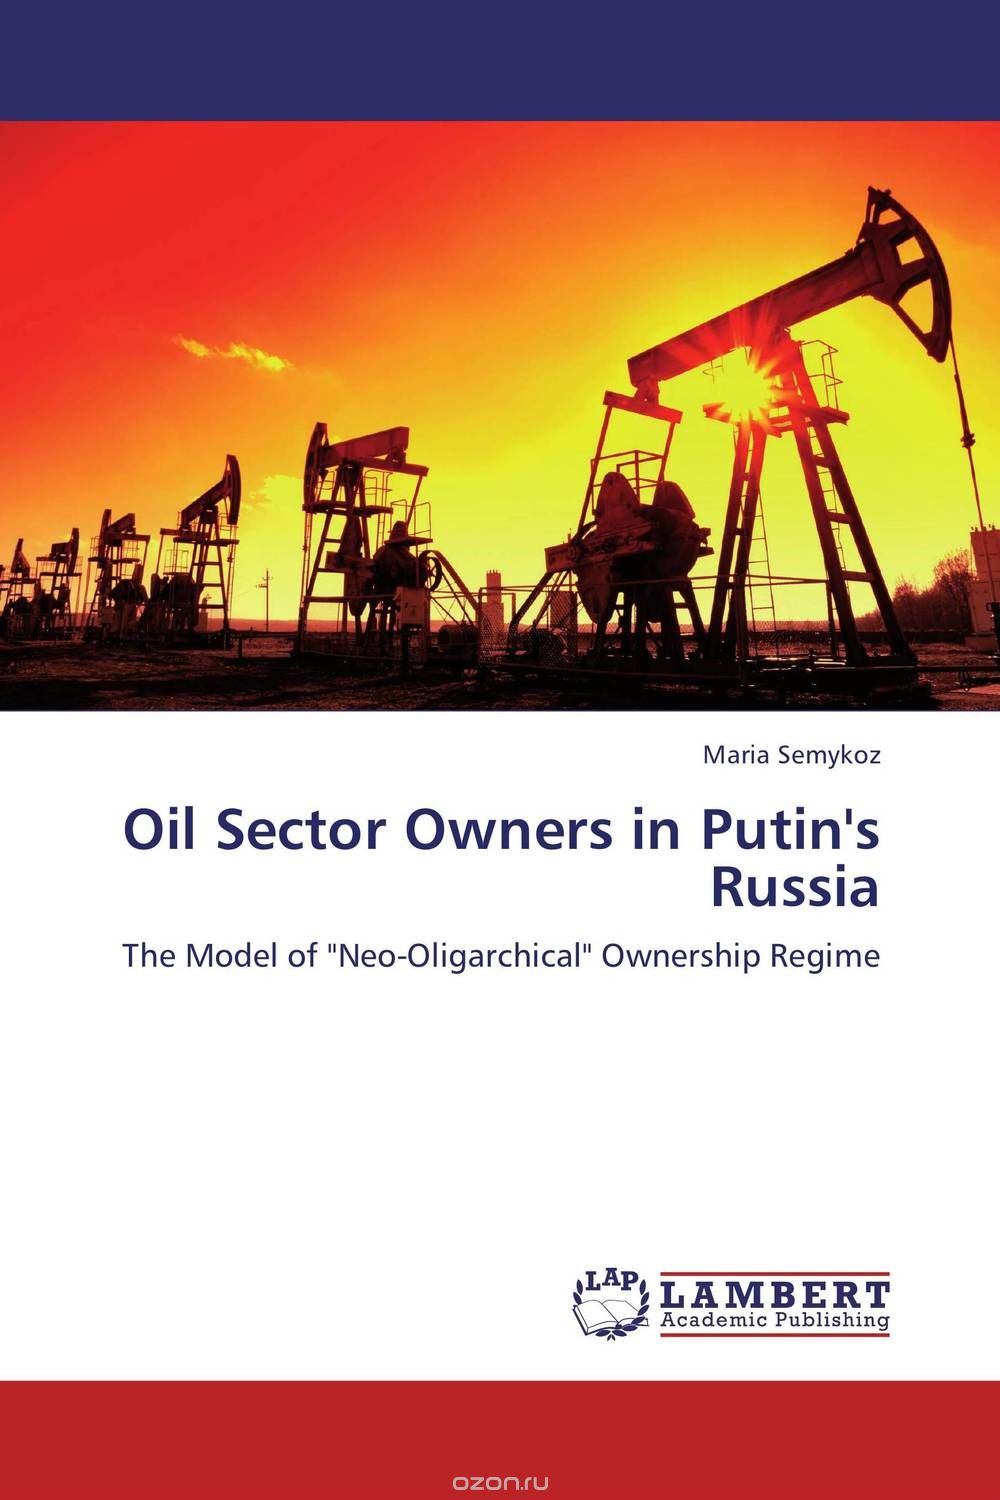 Скачать книгу "Oil Sector Owners in Putin's Russia"